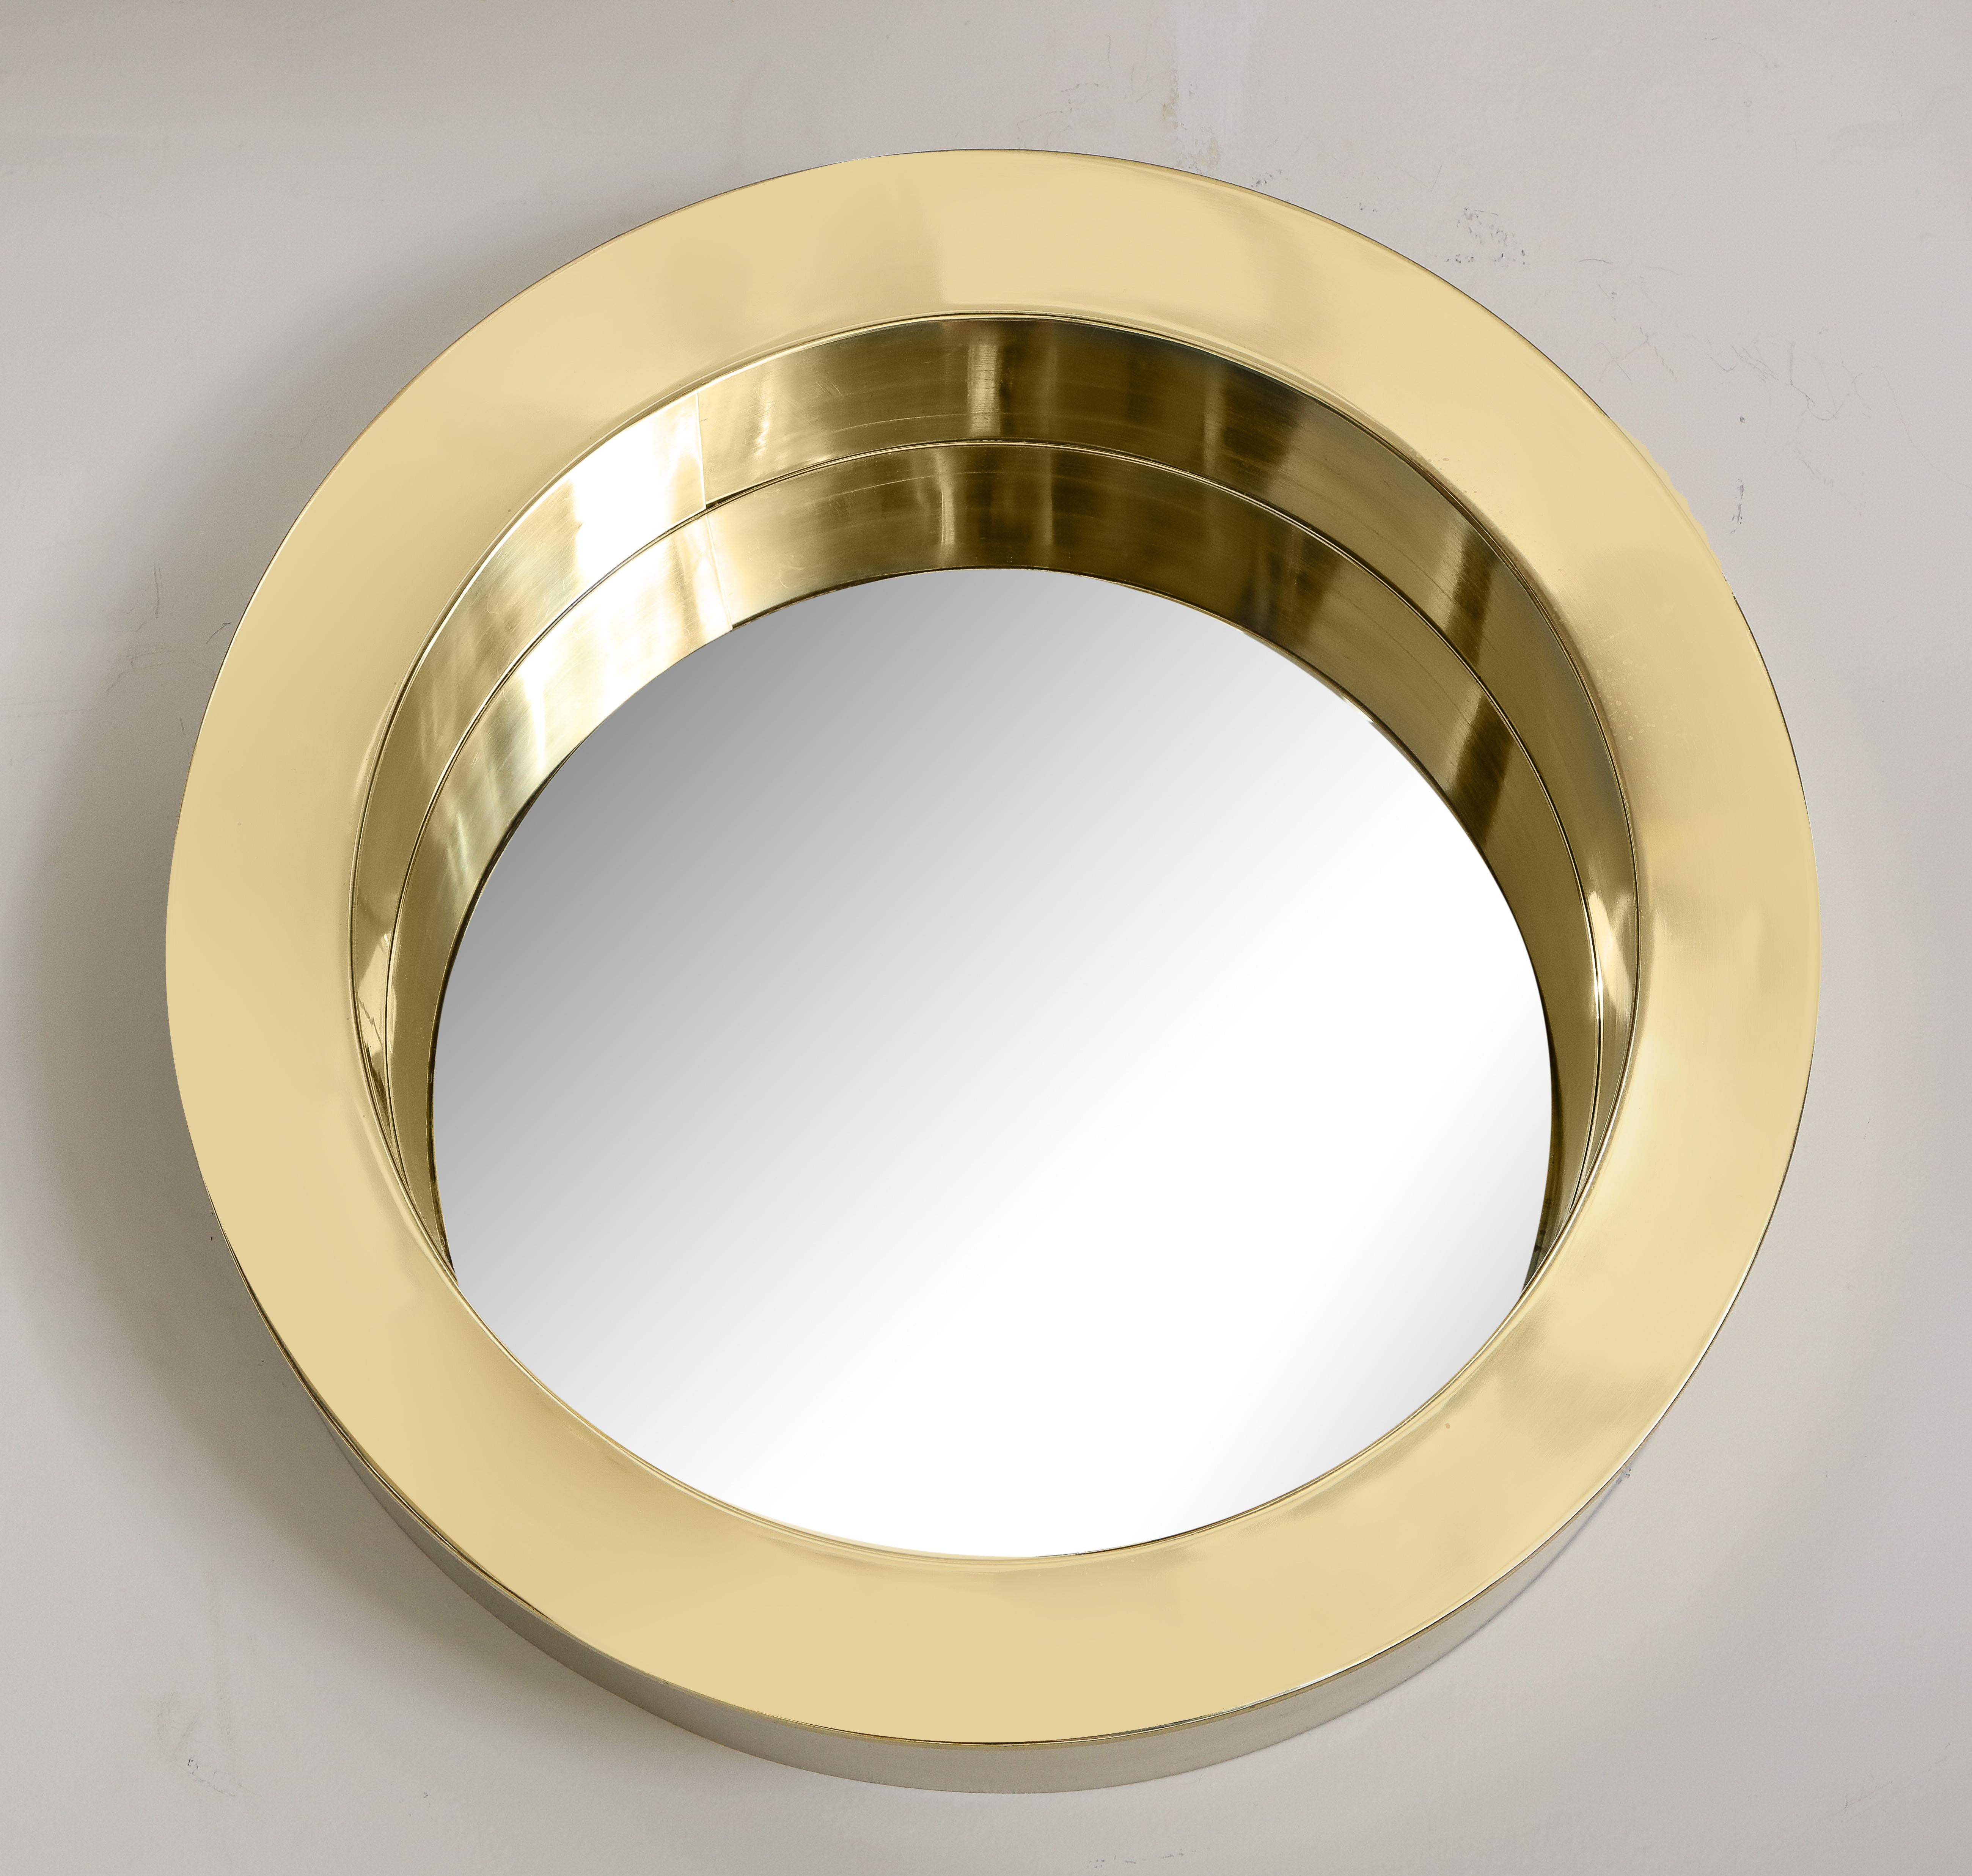 Modernist circular brass mirror.